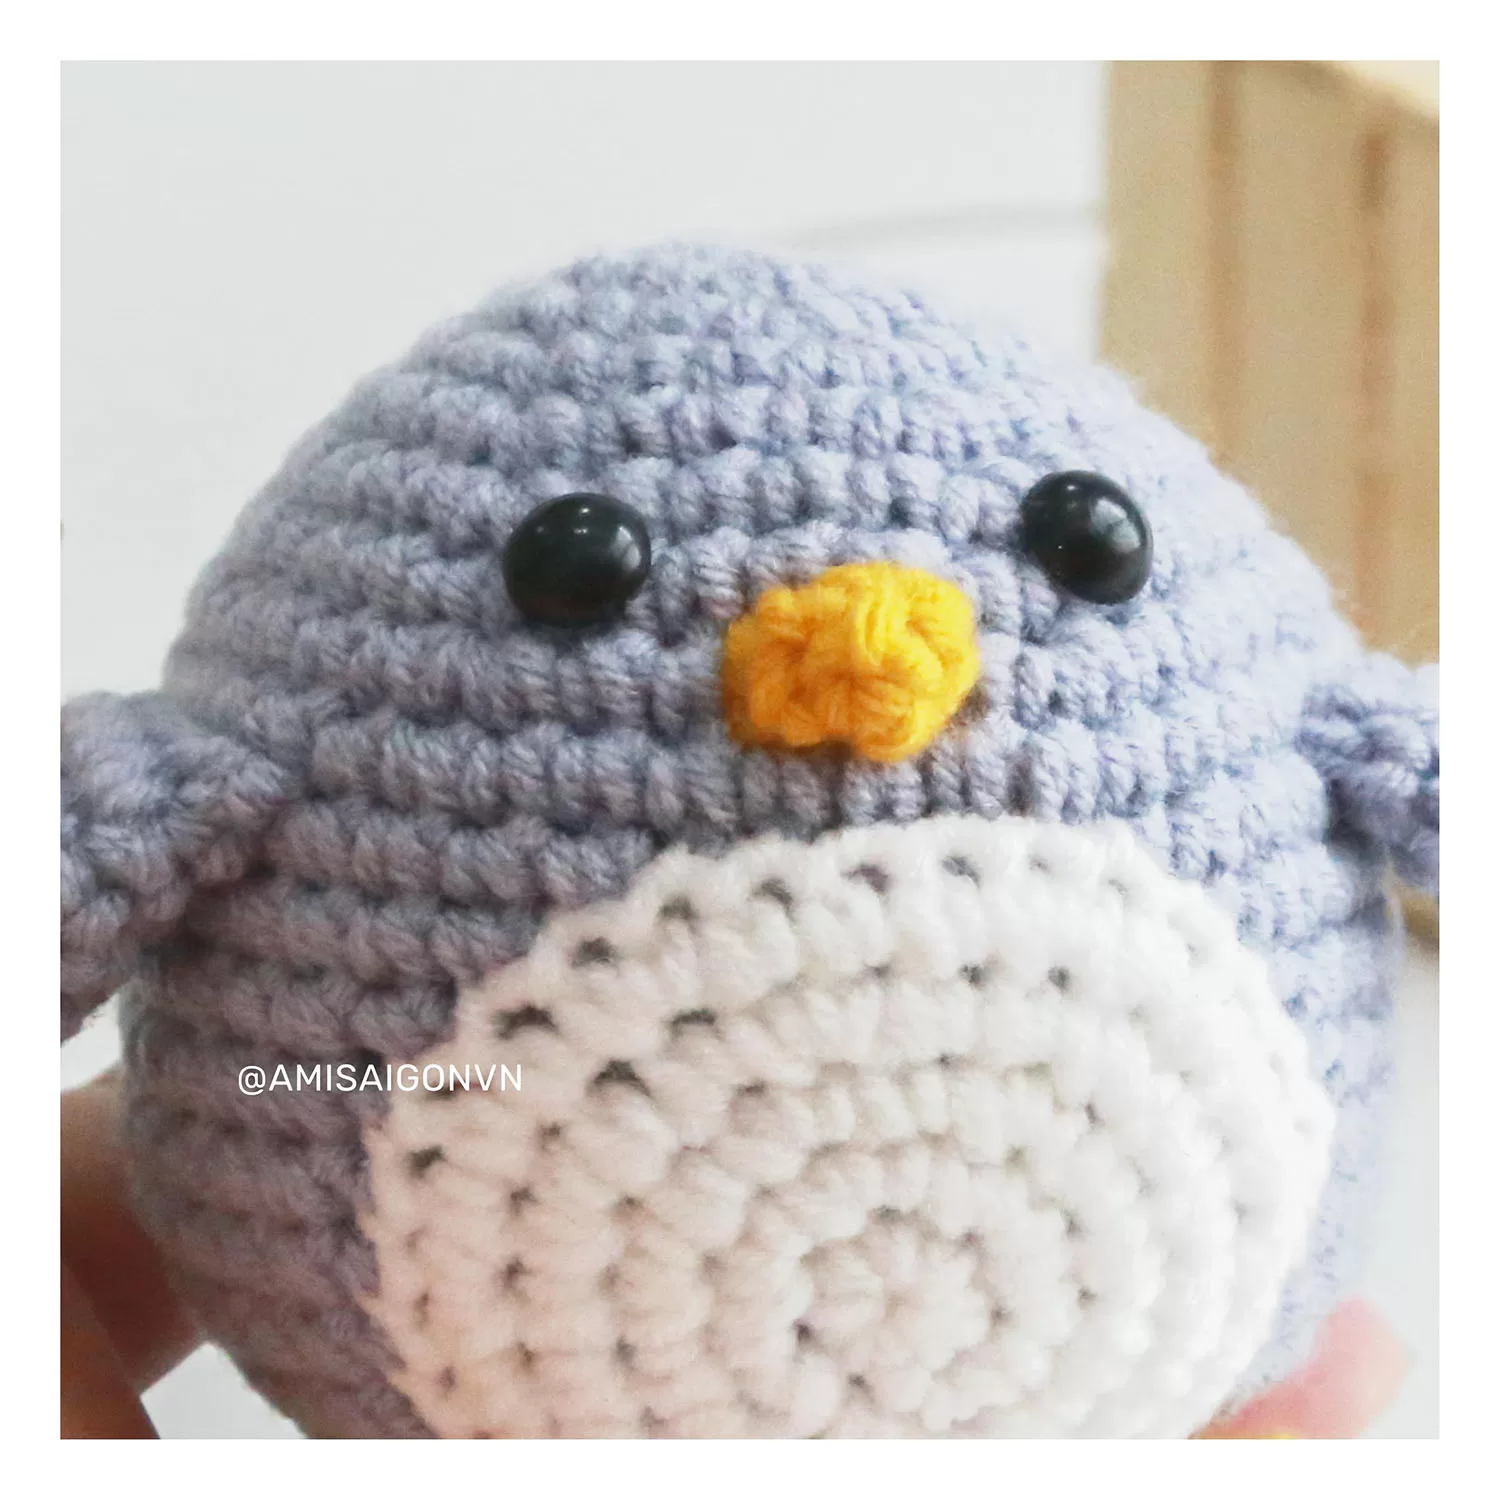 Penguin Amigurumi | Crochet Pattern | Amigurumi Tutorial PDF in English | AmiSaigon